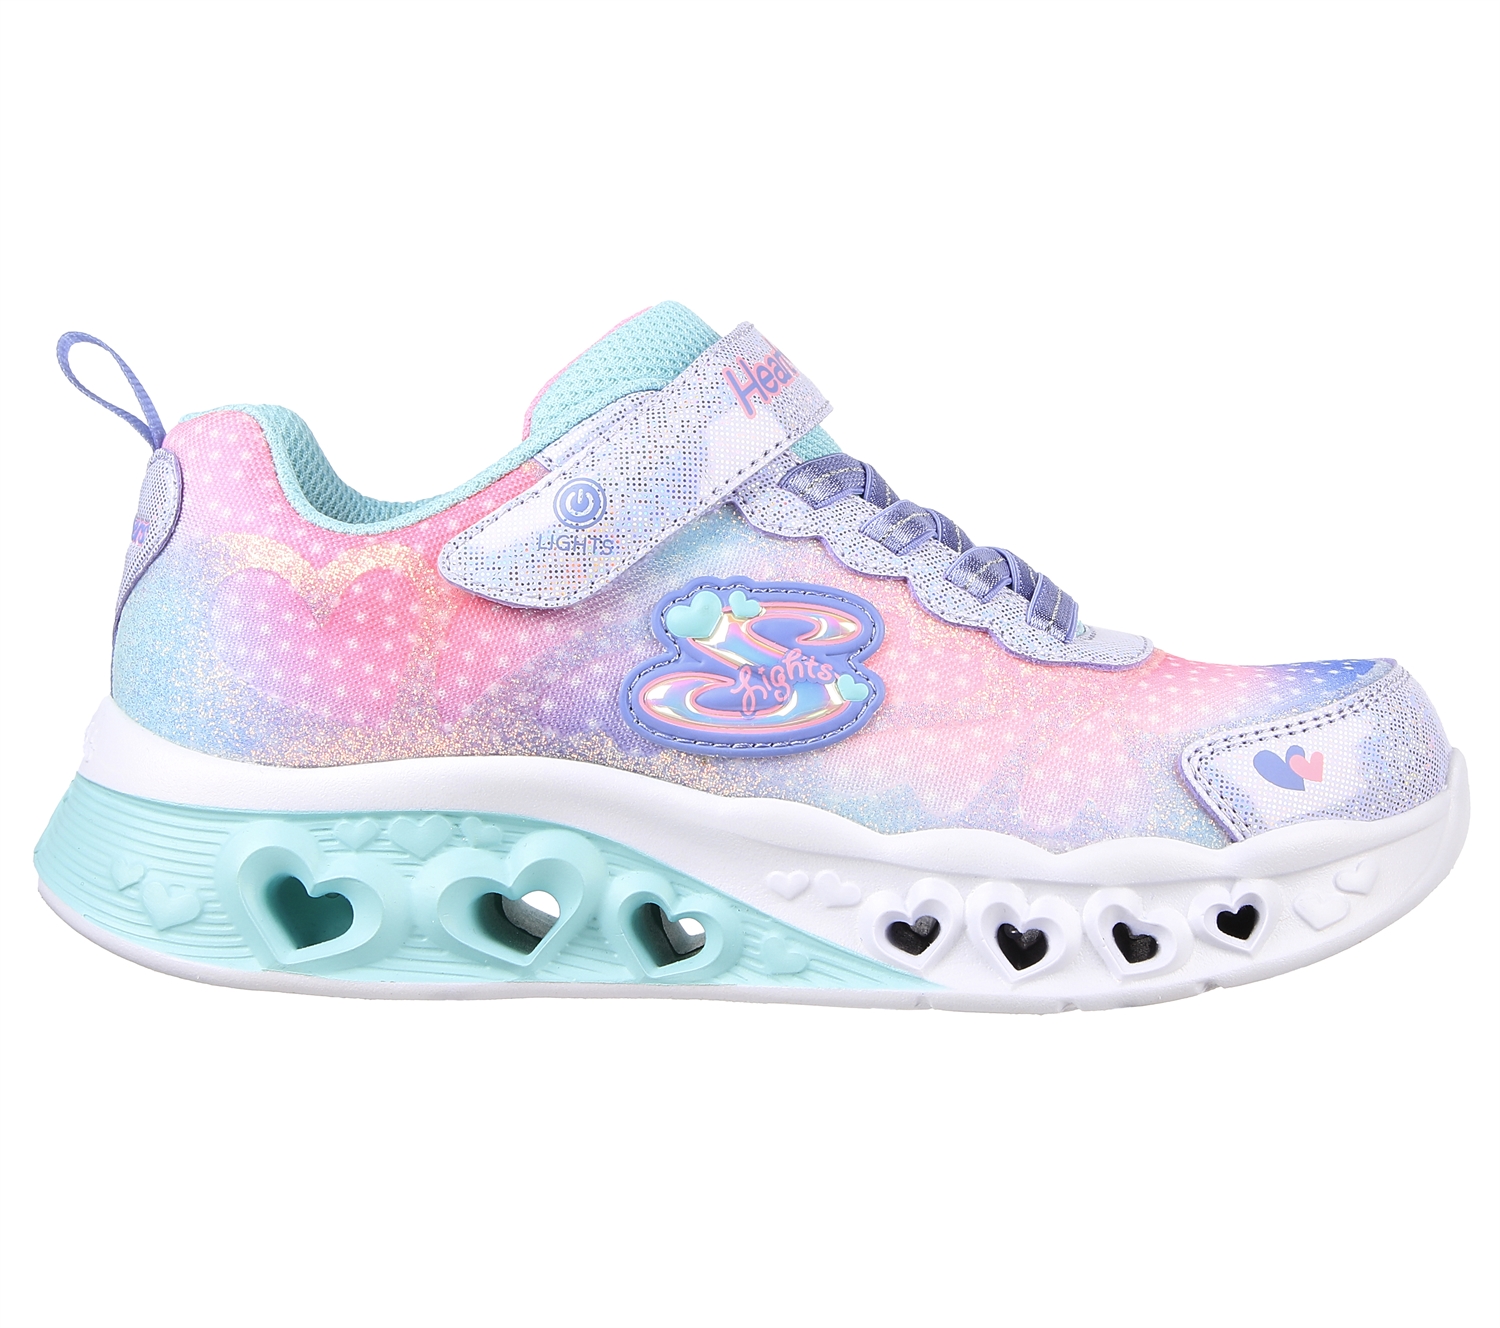 kontroversiel reform Luscious Skechers Girls Flutter Heart Lights - Simply Love - Lavender multicolour  (blinke sneakers)